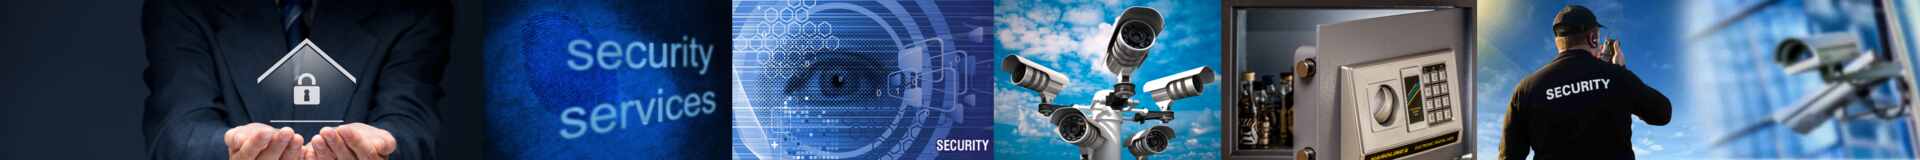 Global Bulgaria Security Services Tenders